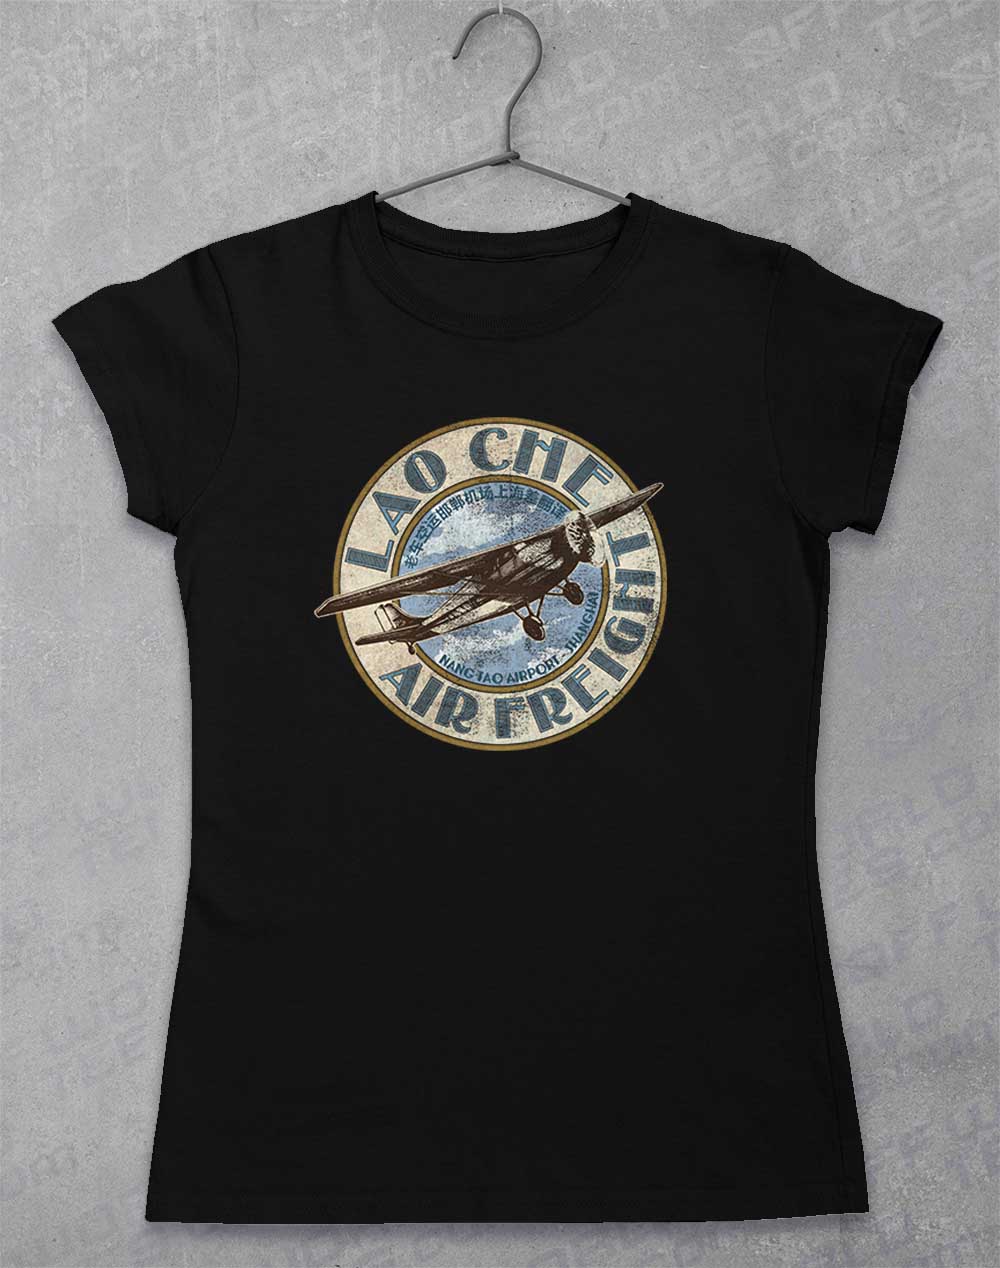 Black - Lao Che Air Freight Women's T-Shirt